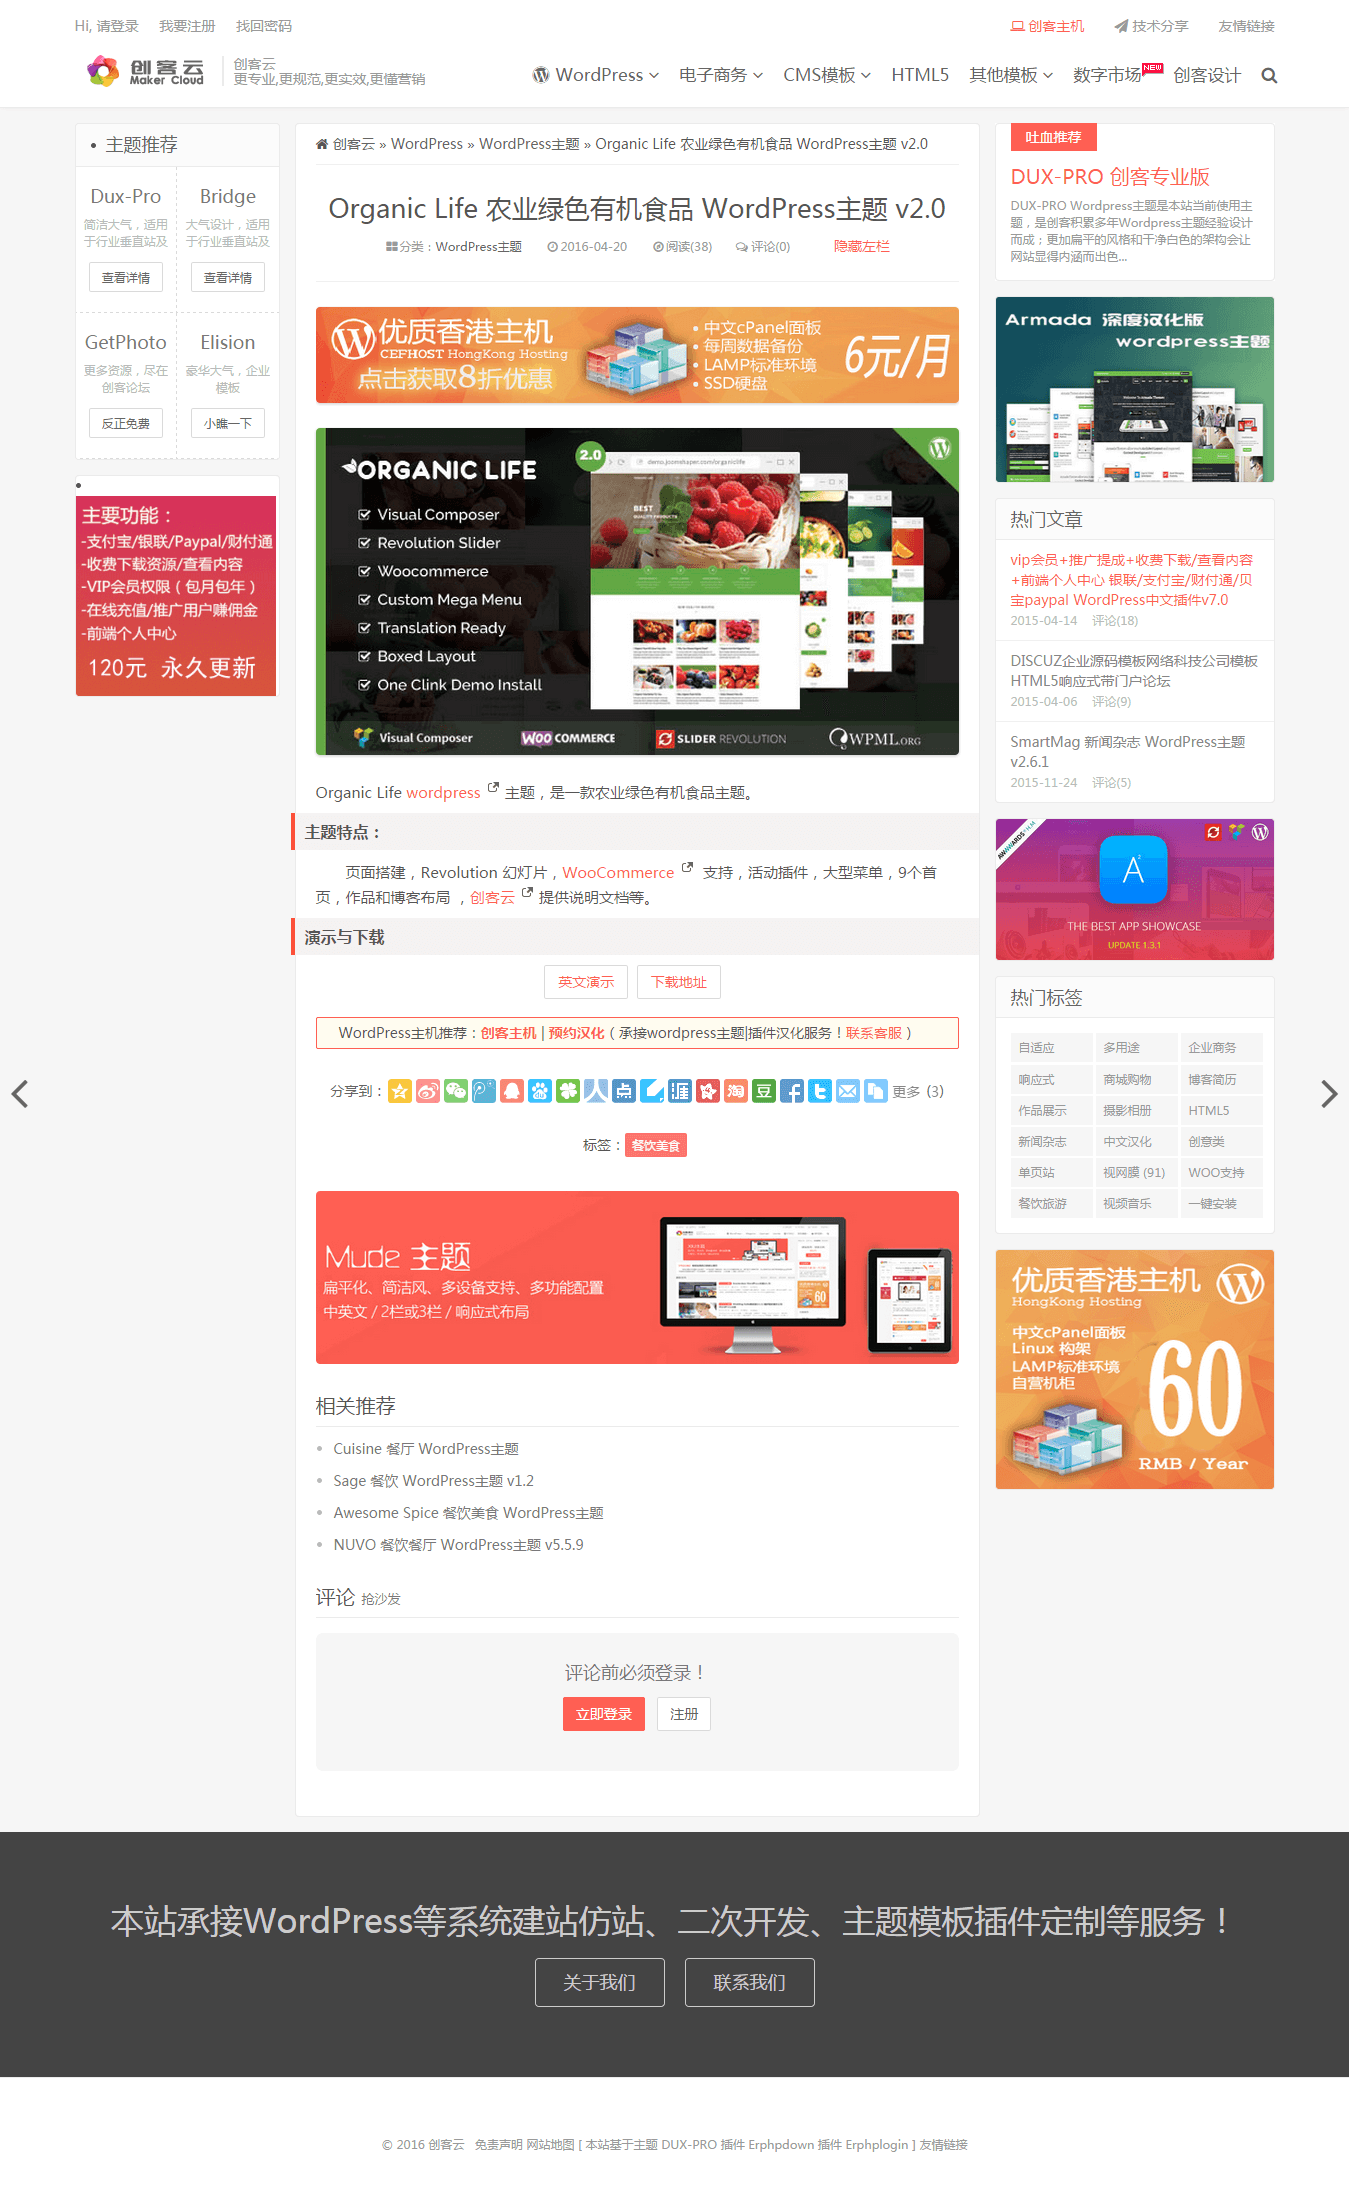 DUX-PRO创客云开发版V2.0去授权无限制版本WordPerss中文主题模板